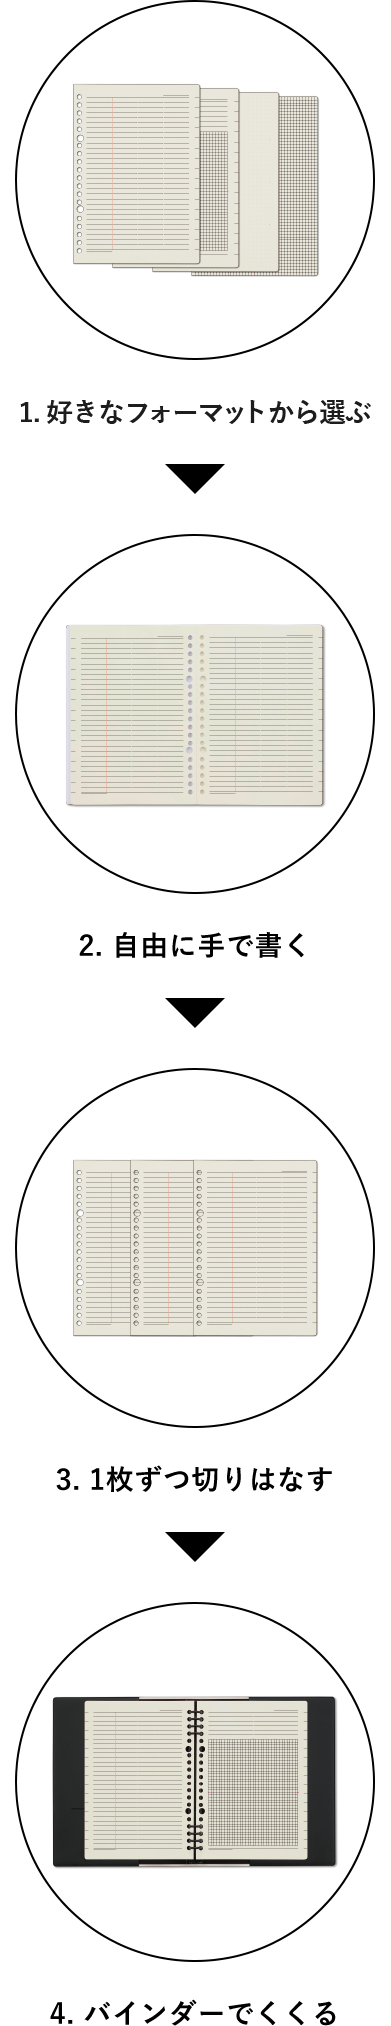 ＮＯＬＴＹノート kukuru A5 ミシン目入り方眼3.5mm [NTK1104] 手帳,ノート |NOLTY  能率手帳・書籍・通信教育のJMAM eショップ